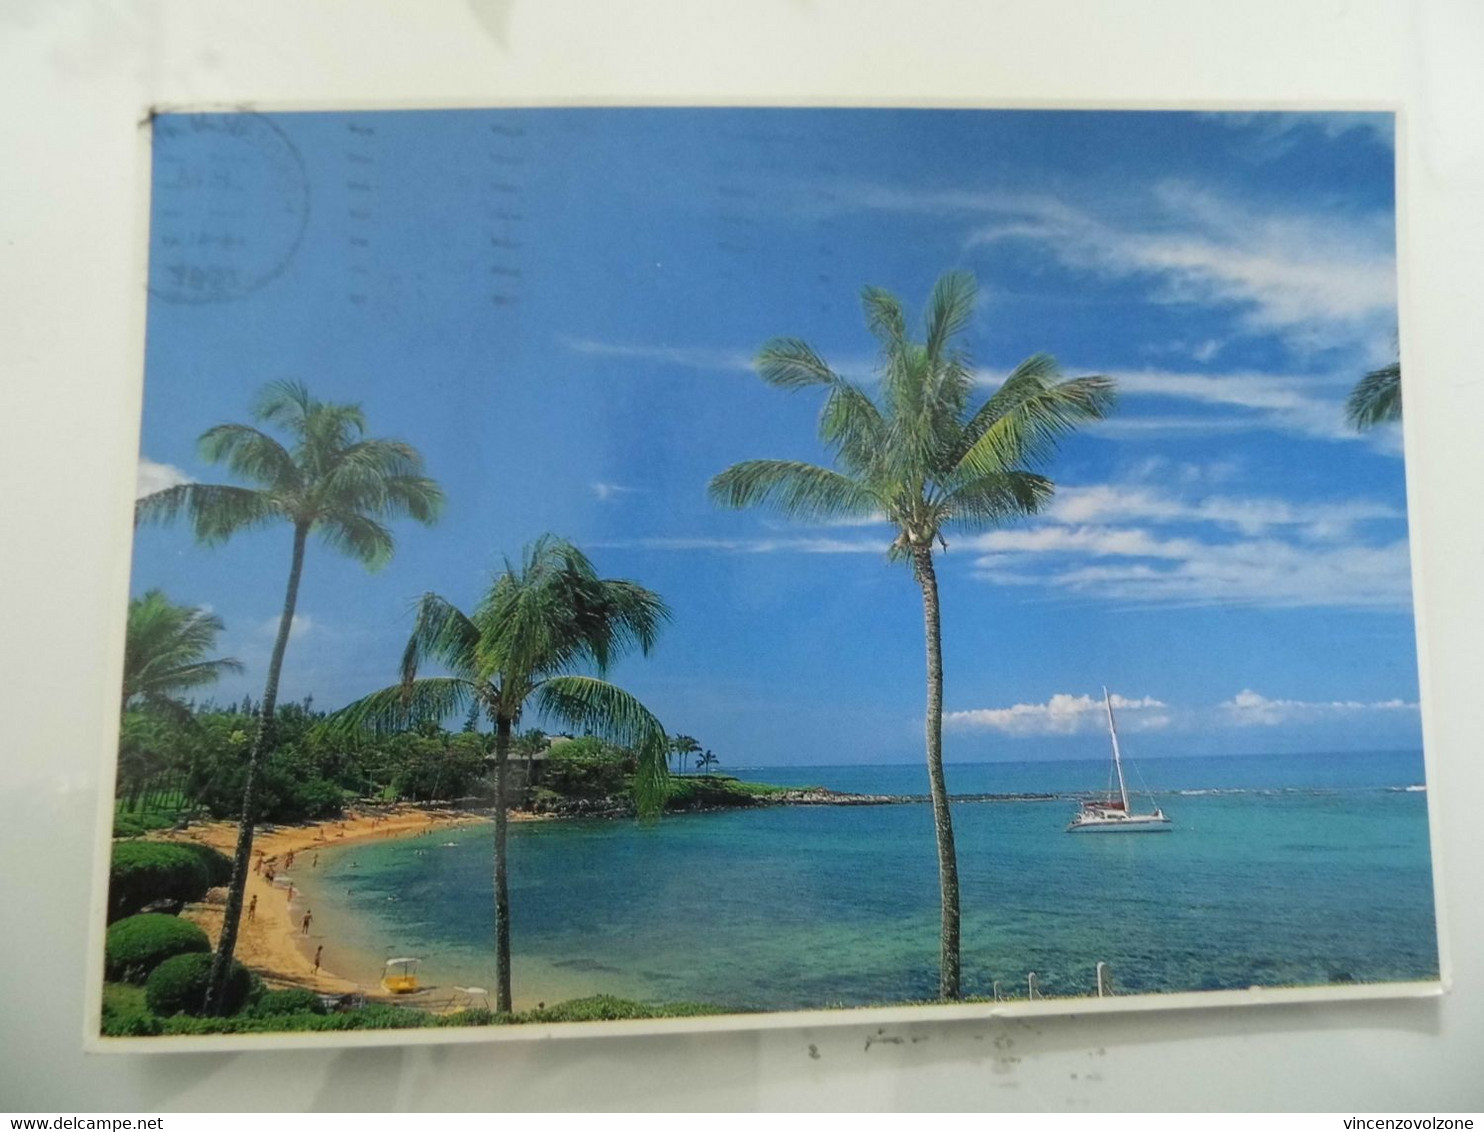 Cartolina Viaggiata "KAPALUA BAY MAUI" 1996 - Maui